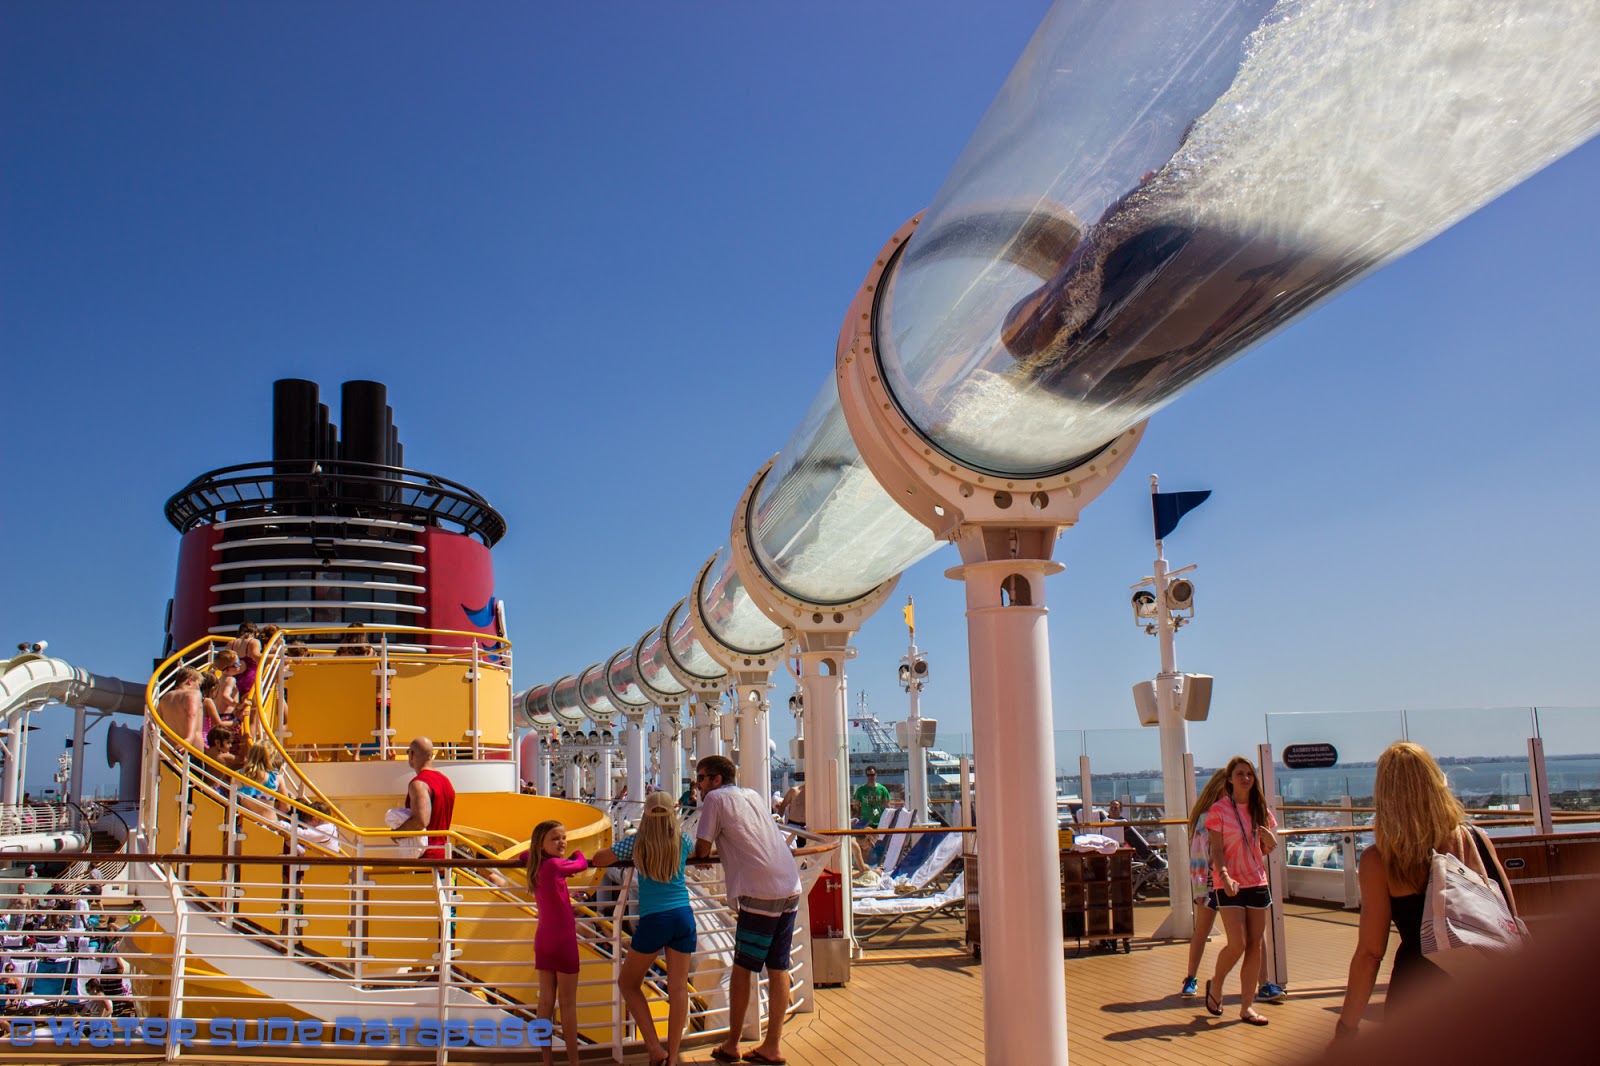 disney cruise dream slides